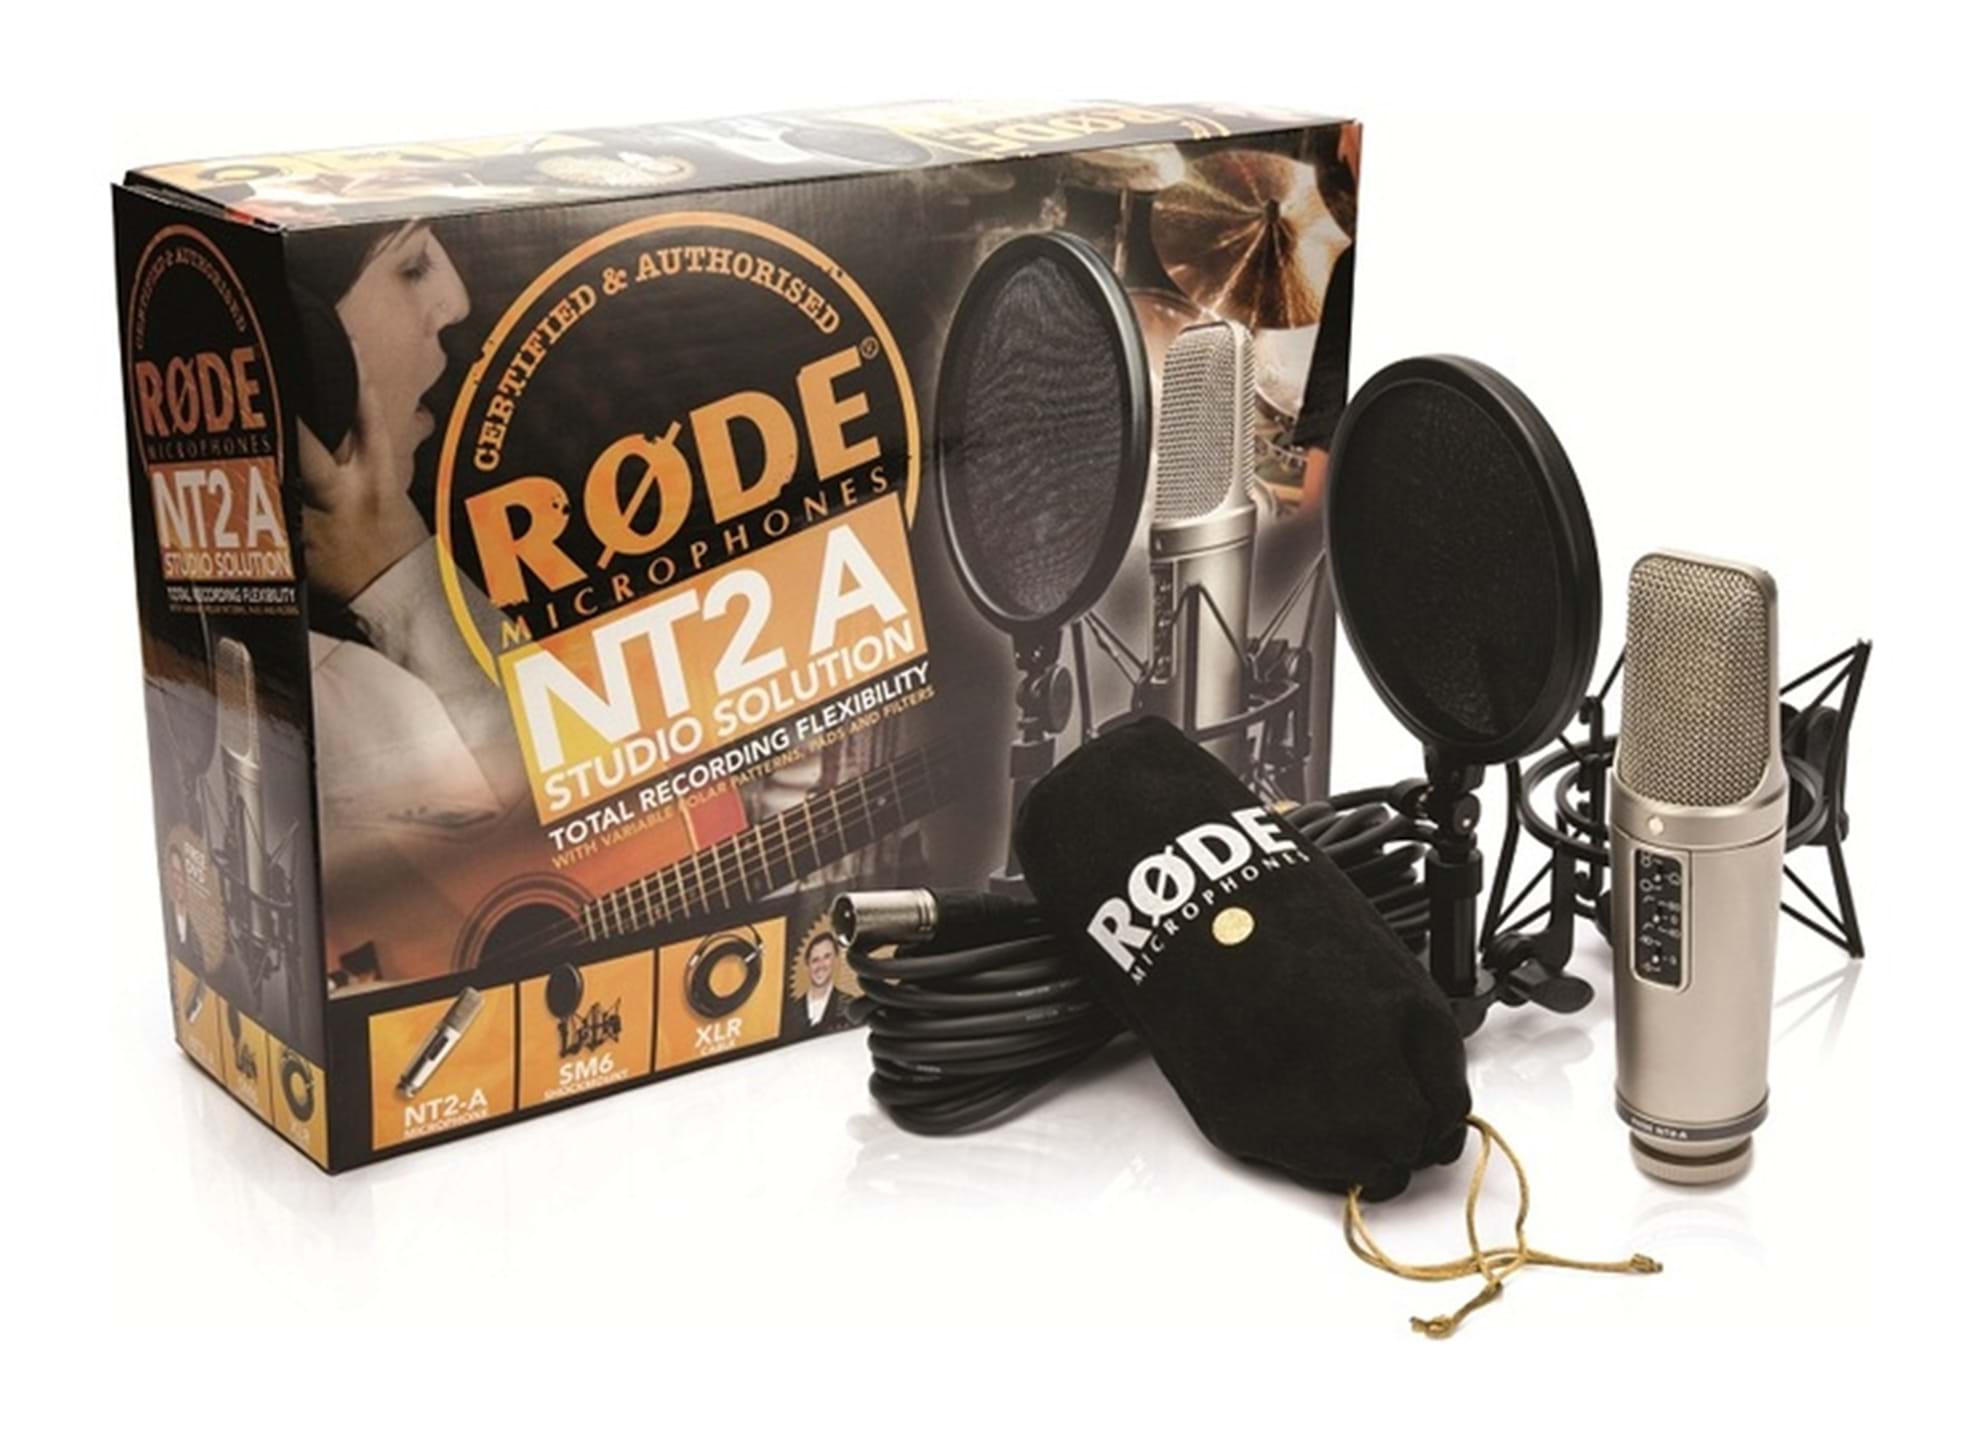 NT2-A Studio kit